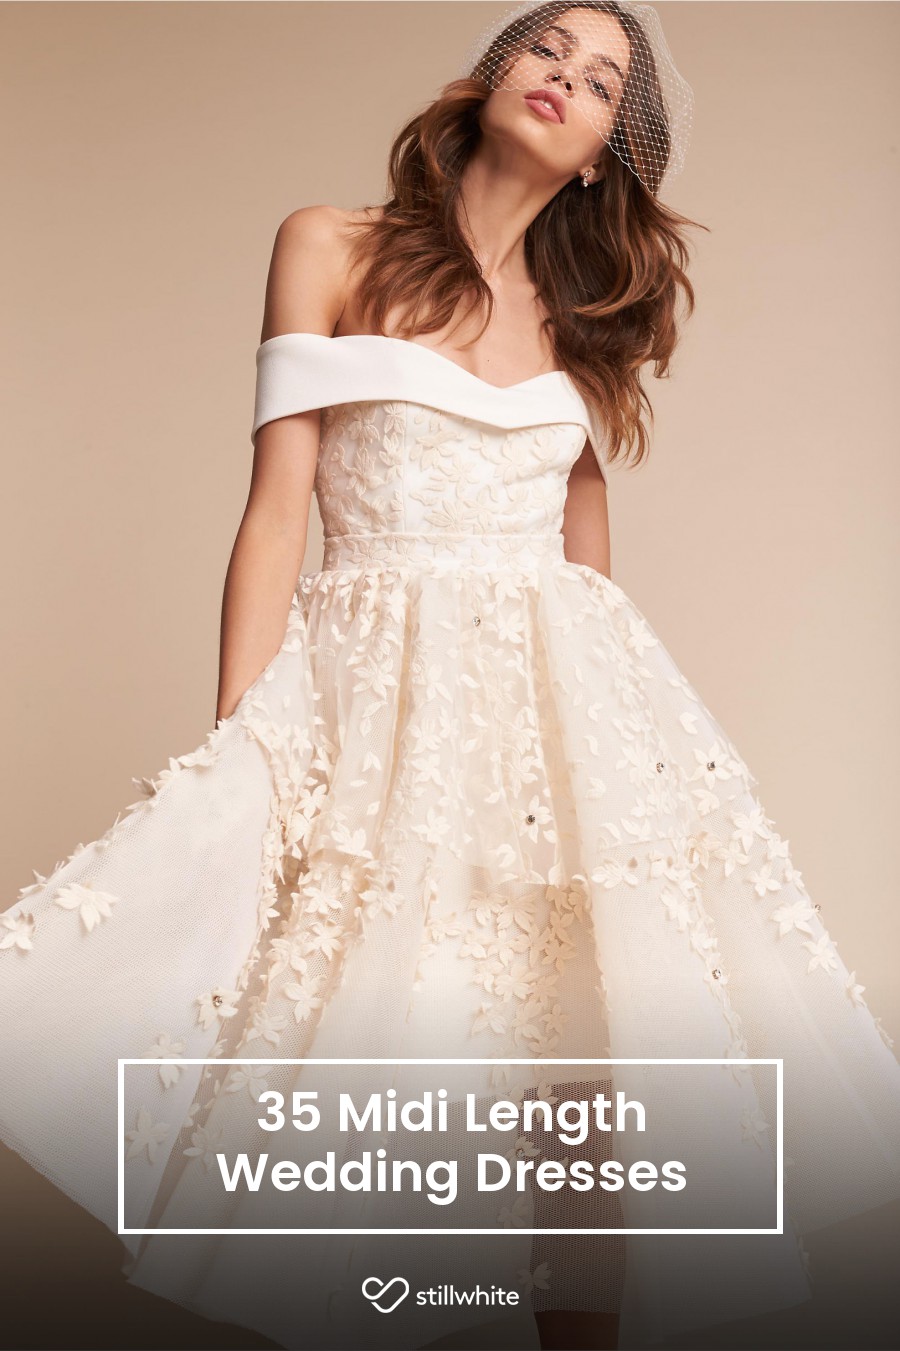 35 Midi Length Wedding Dresses – Stillwhite Blog